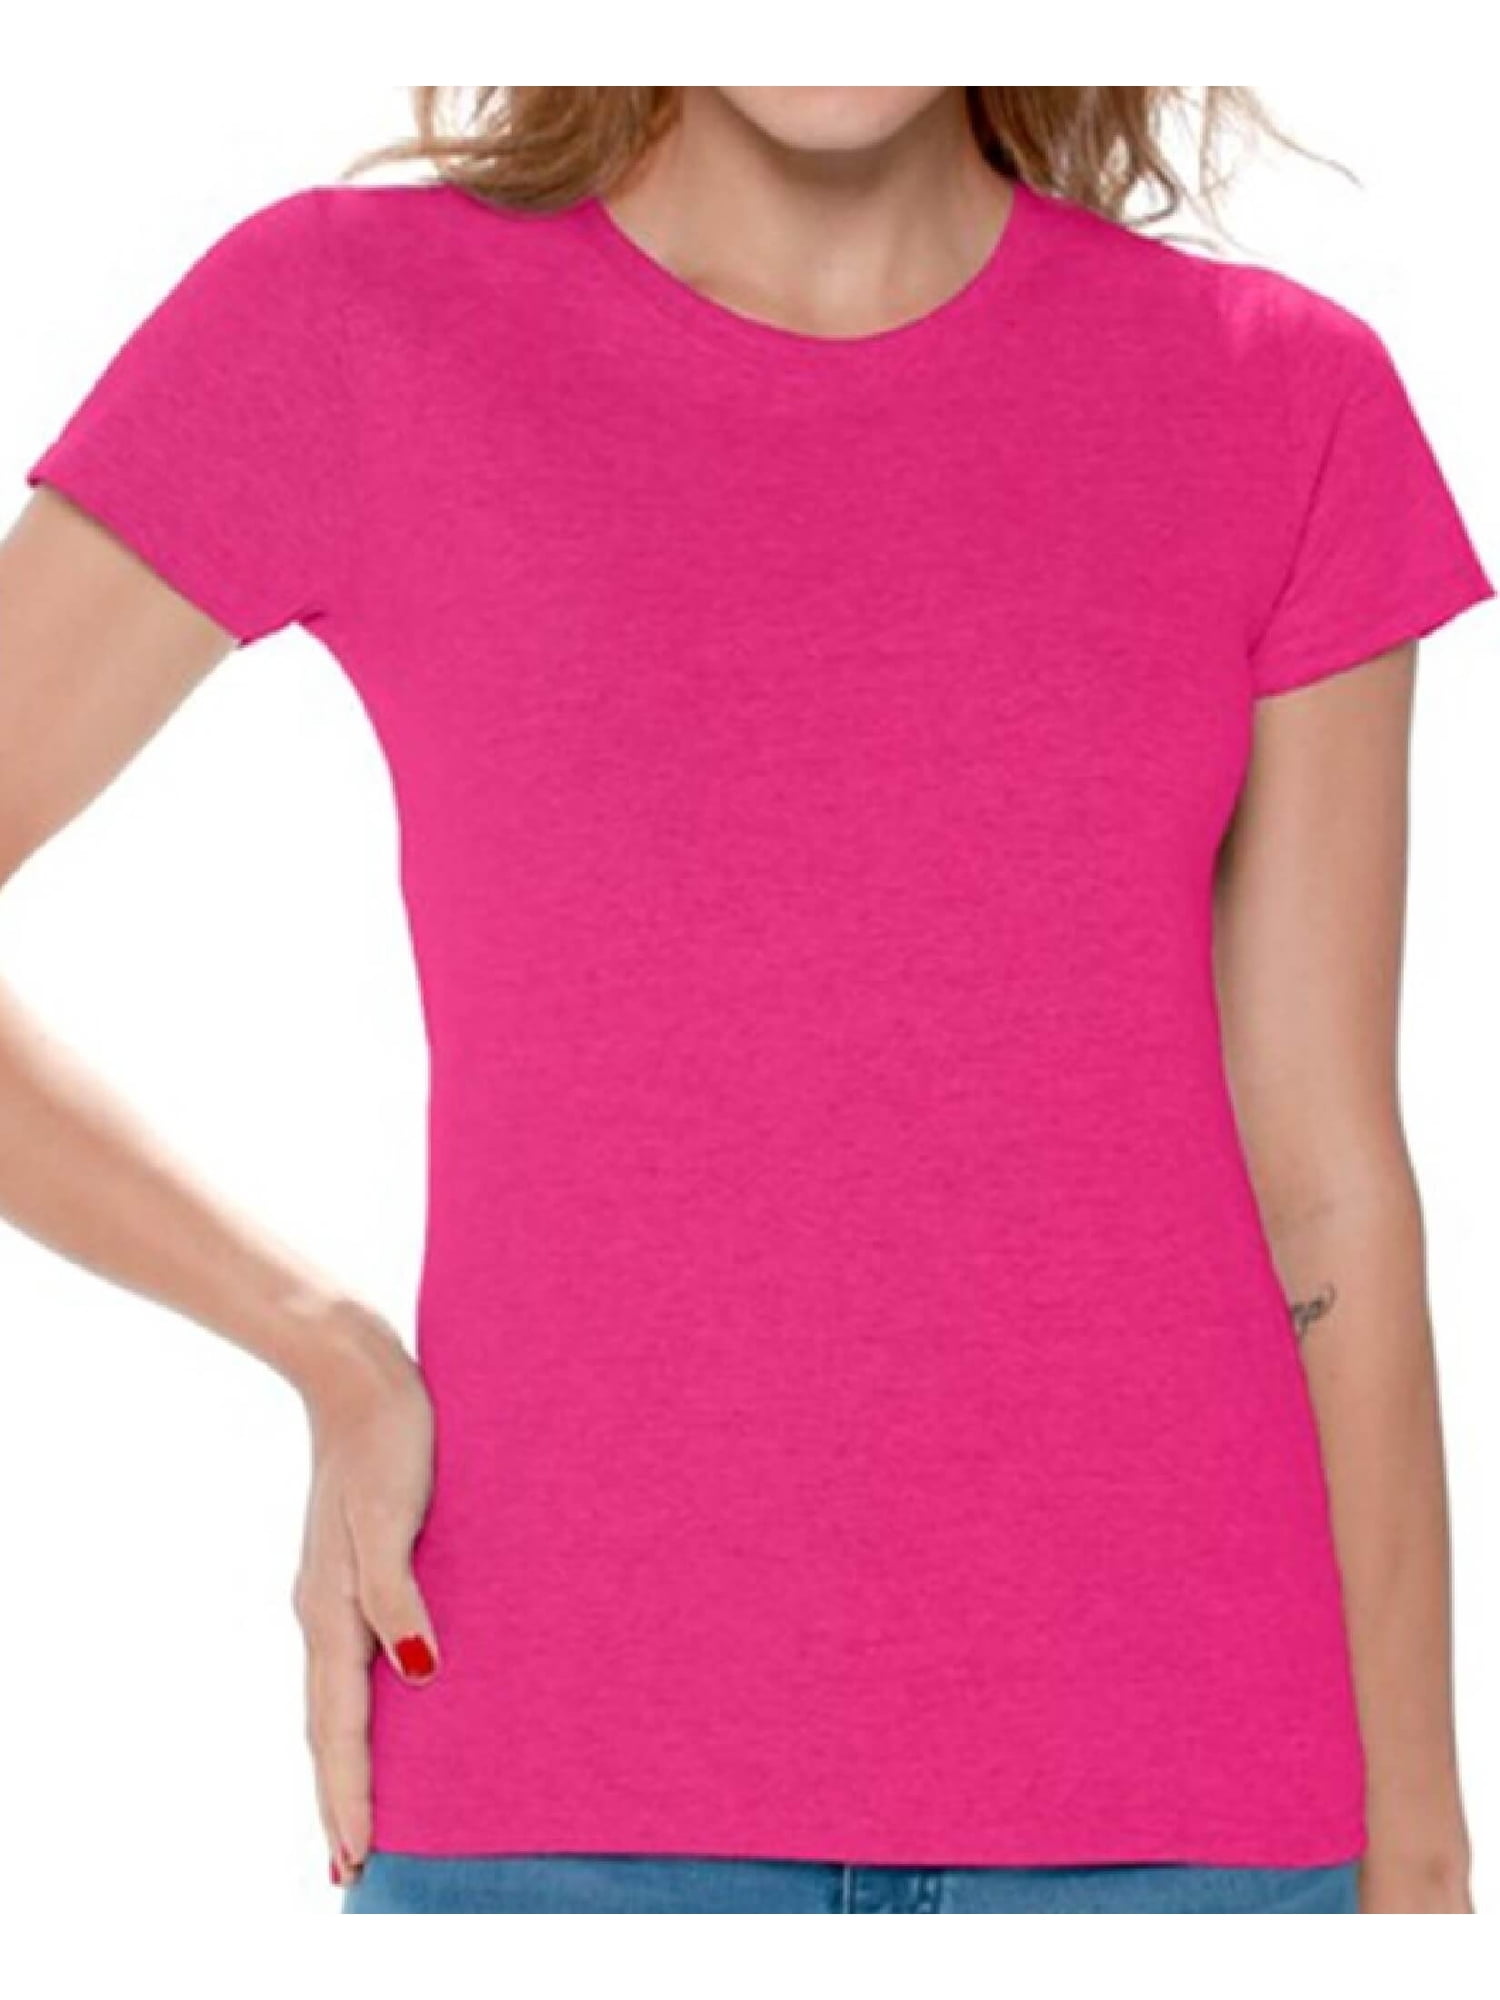 Være opføre sig systematisk Gildan Women Pink T-Shirts Value Pack Shirts for Women - Single OR Pack of  6 OR Pack of 12 Cute Casual Plain Pink Shirts for Women Gildan T-shirts for  Women T-shirt Casual